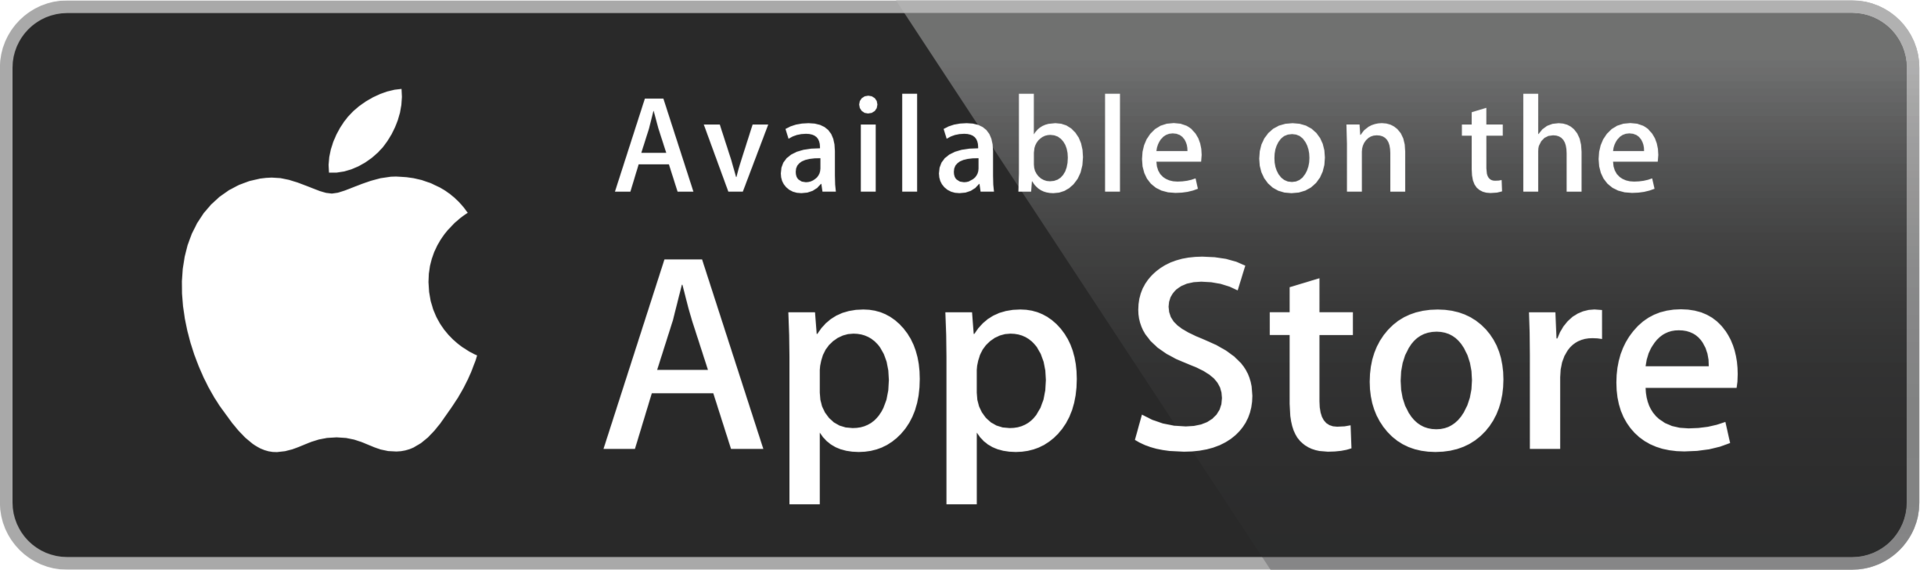 apple App Store logo